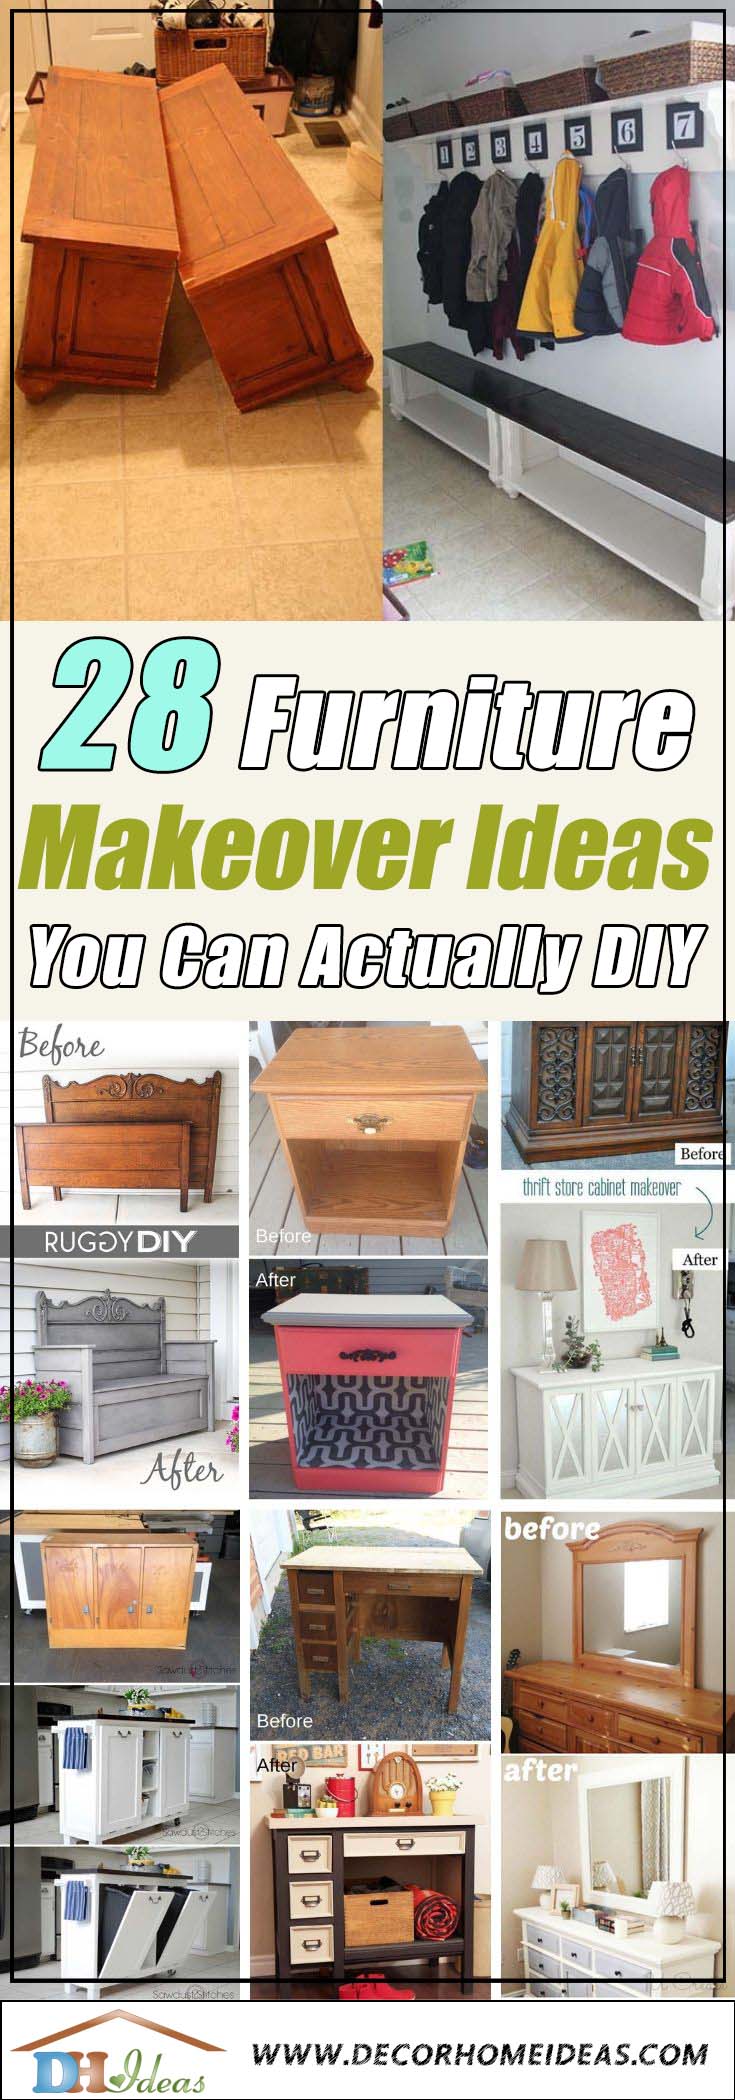 DIY Furniture Makeover Ideas #furniture #makeover #decorhomeideas